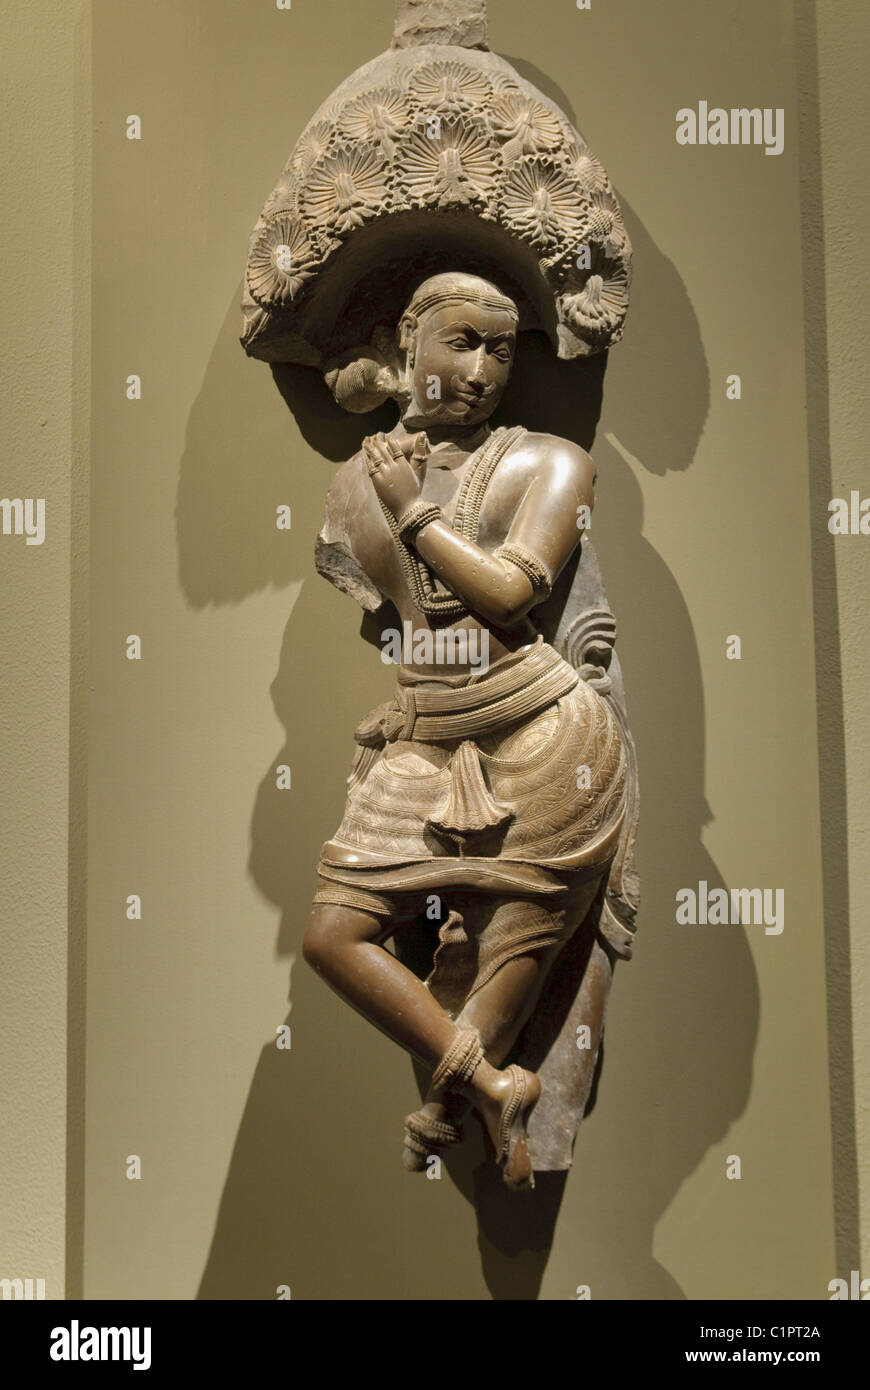 Músico, Celeste (Gandharva), del siglo XI; la India, Foto de stock